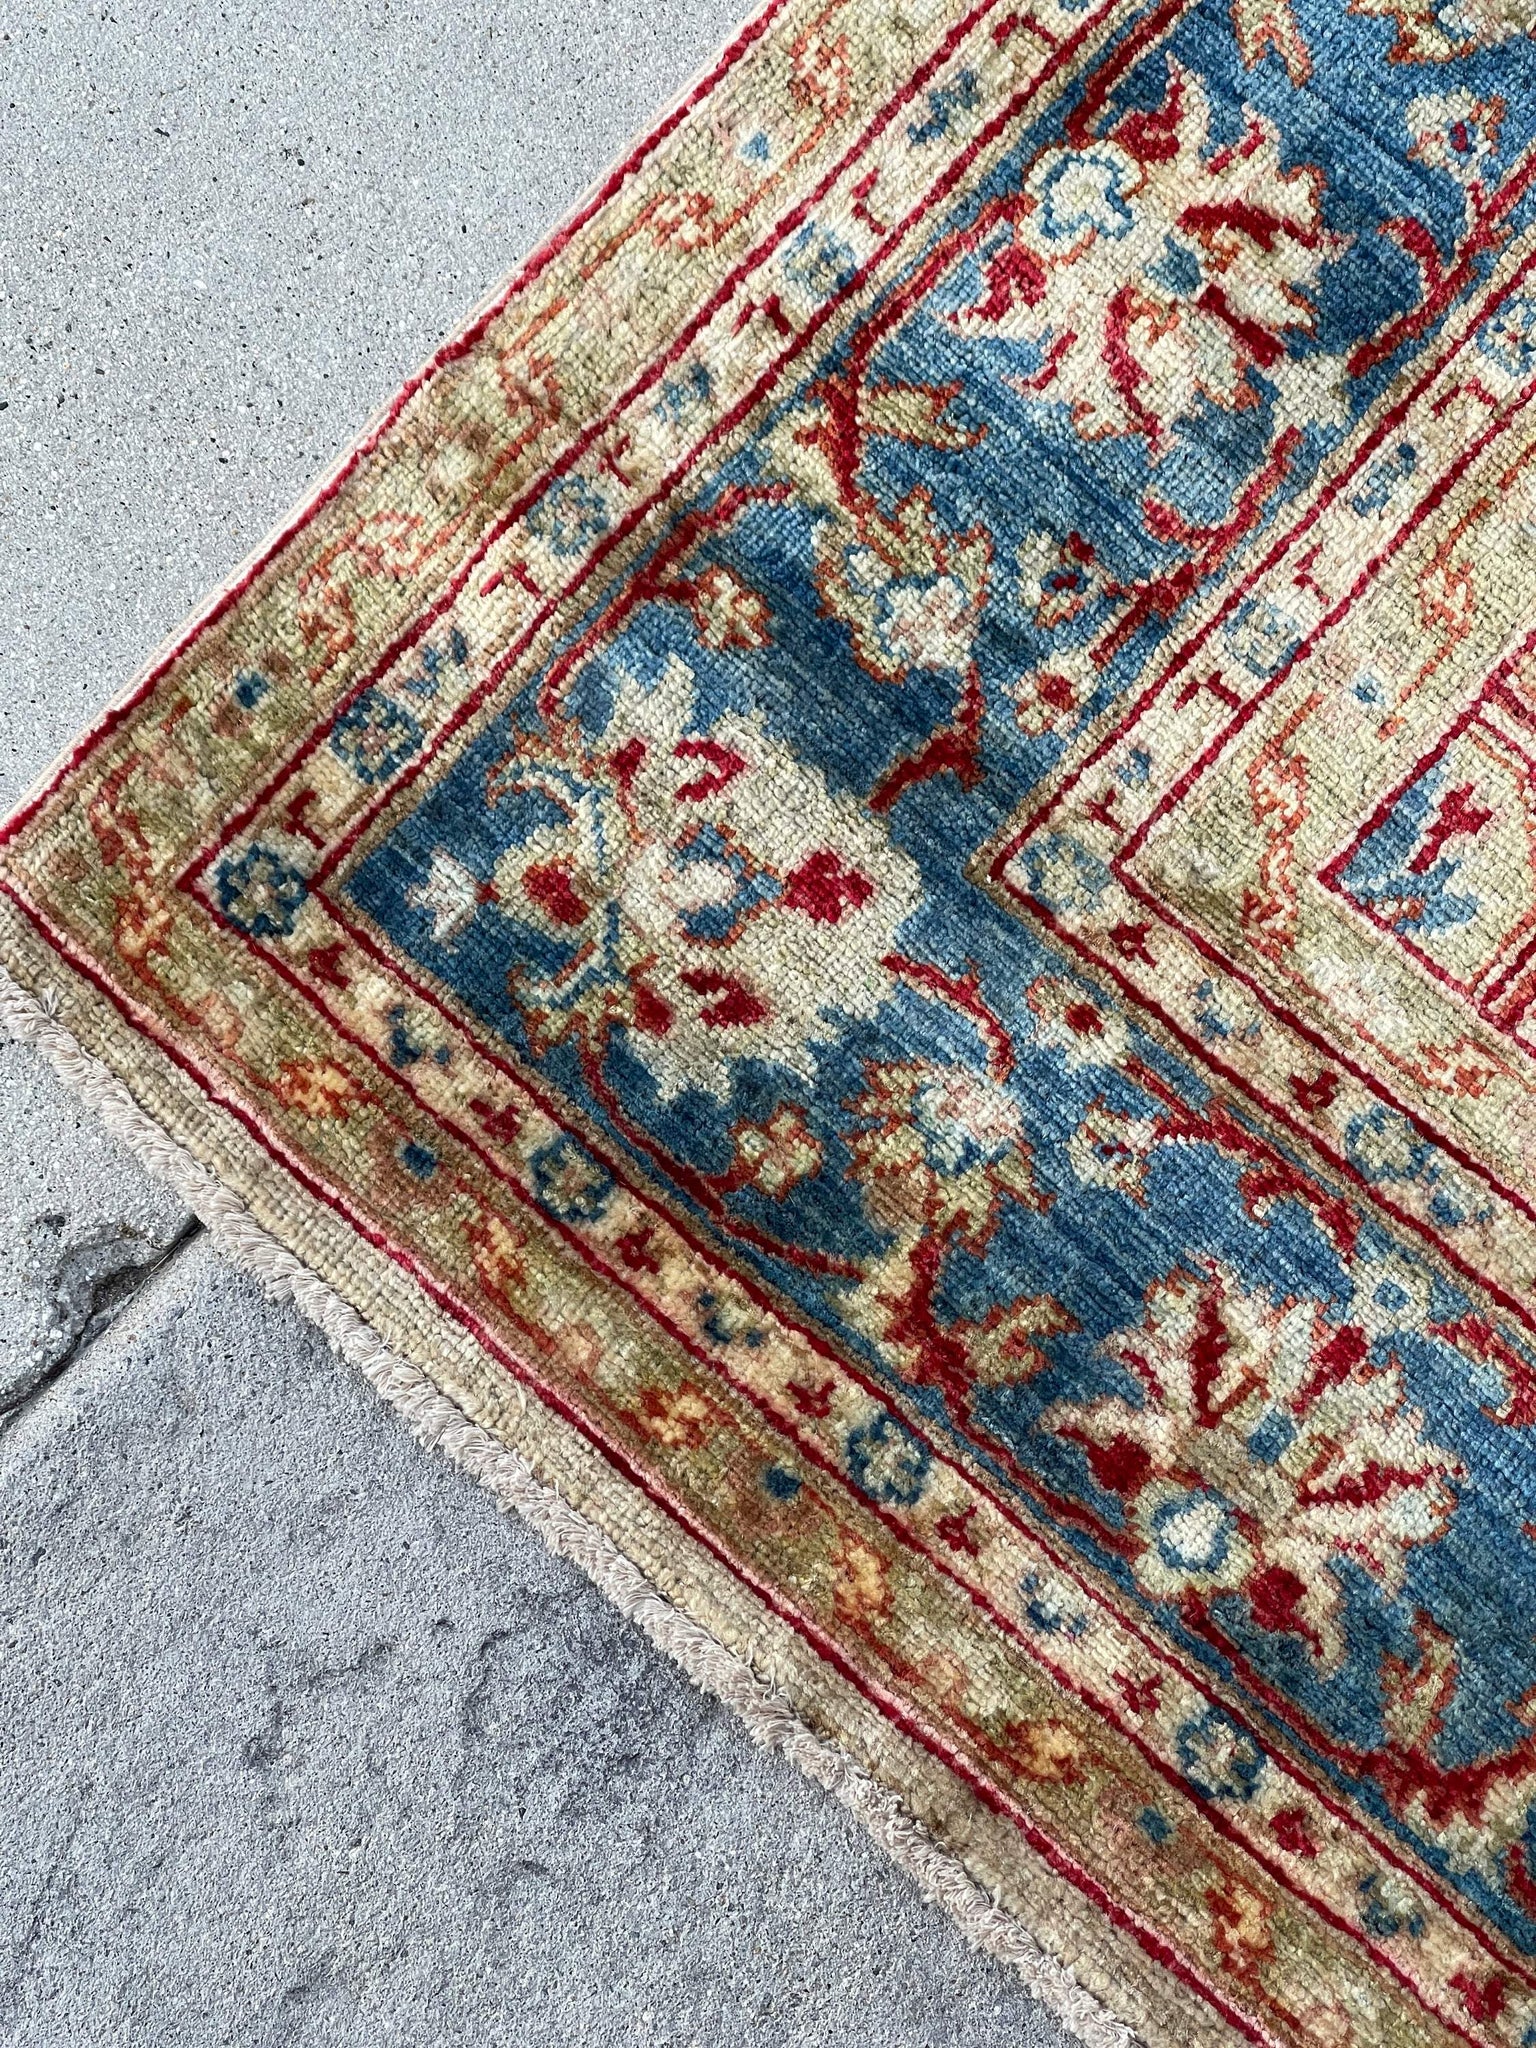 6x8 Cream Ivory Blue Red Handmade Afghan Rug | Boho Turkish Oushak Vintage Persian Tribal Hand Knotted